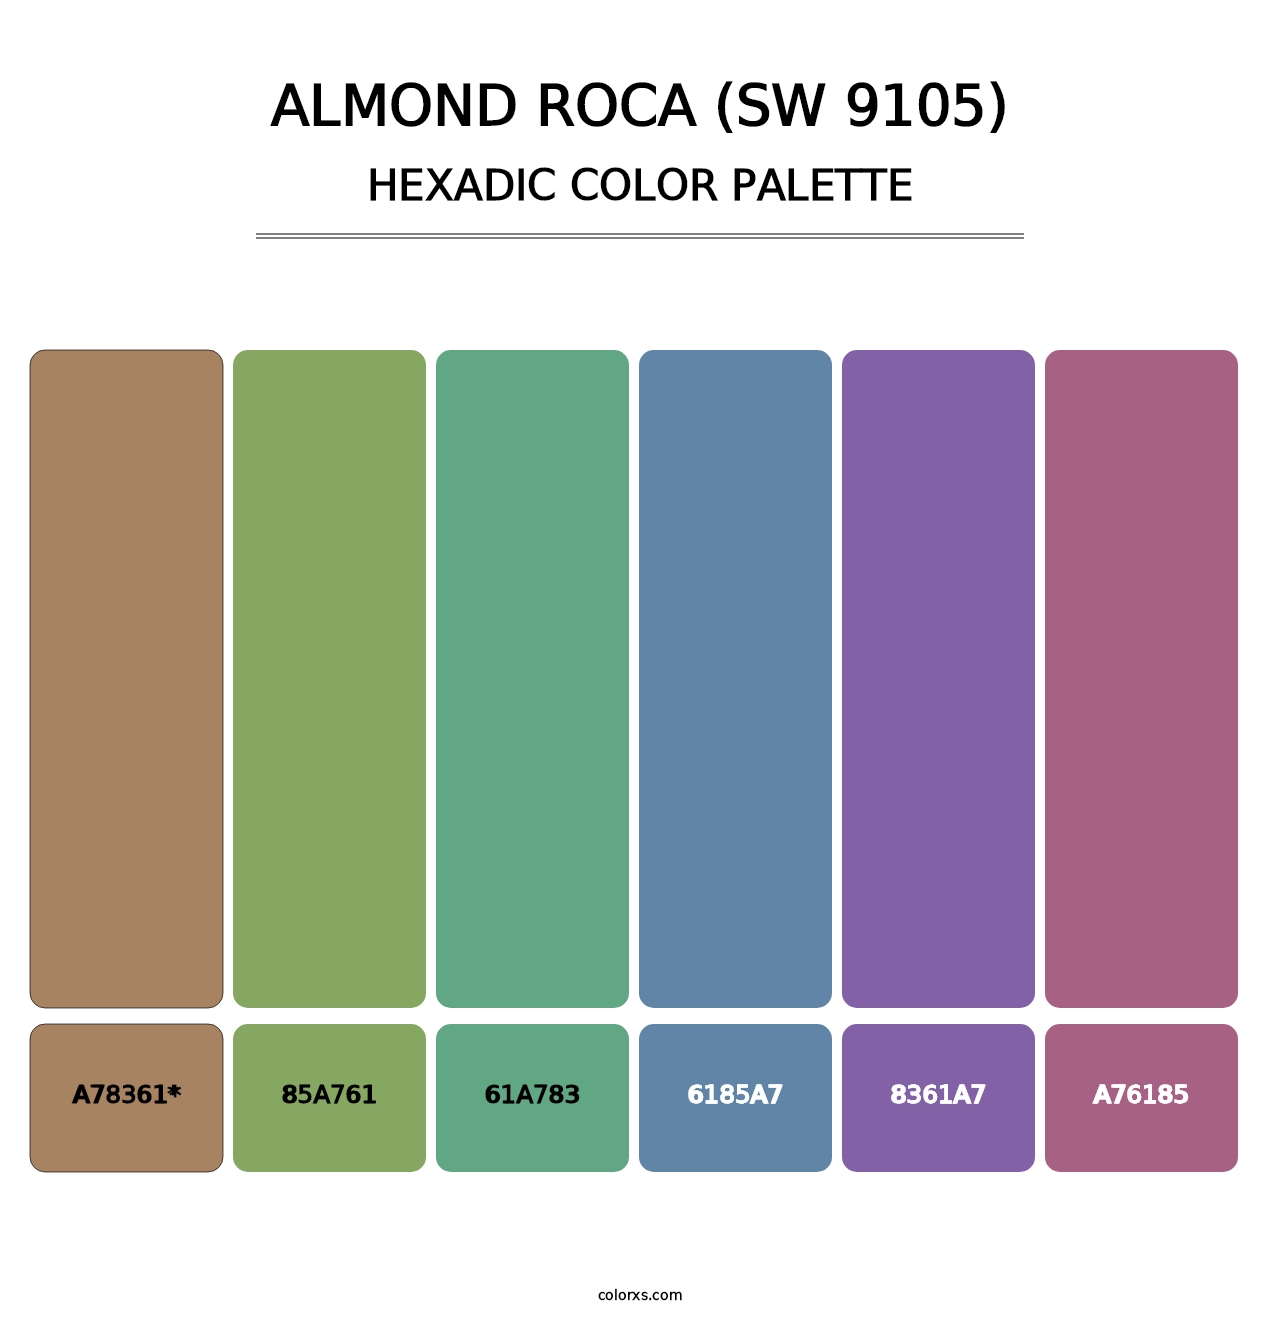 Almond Roca (SW 9105) - Hexadic Color Palette